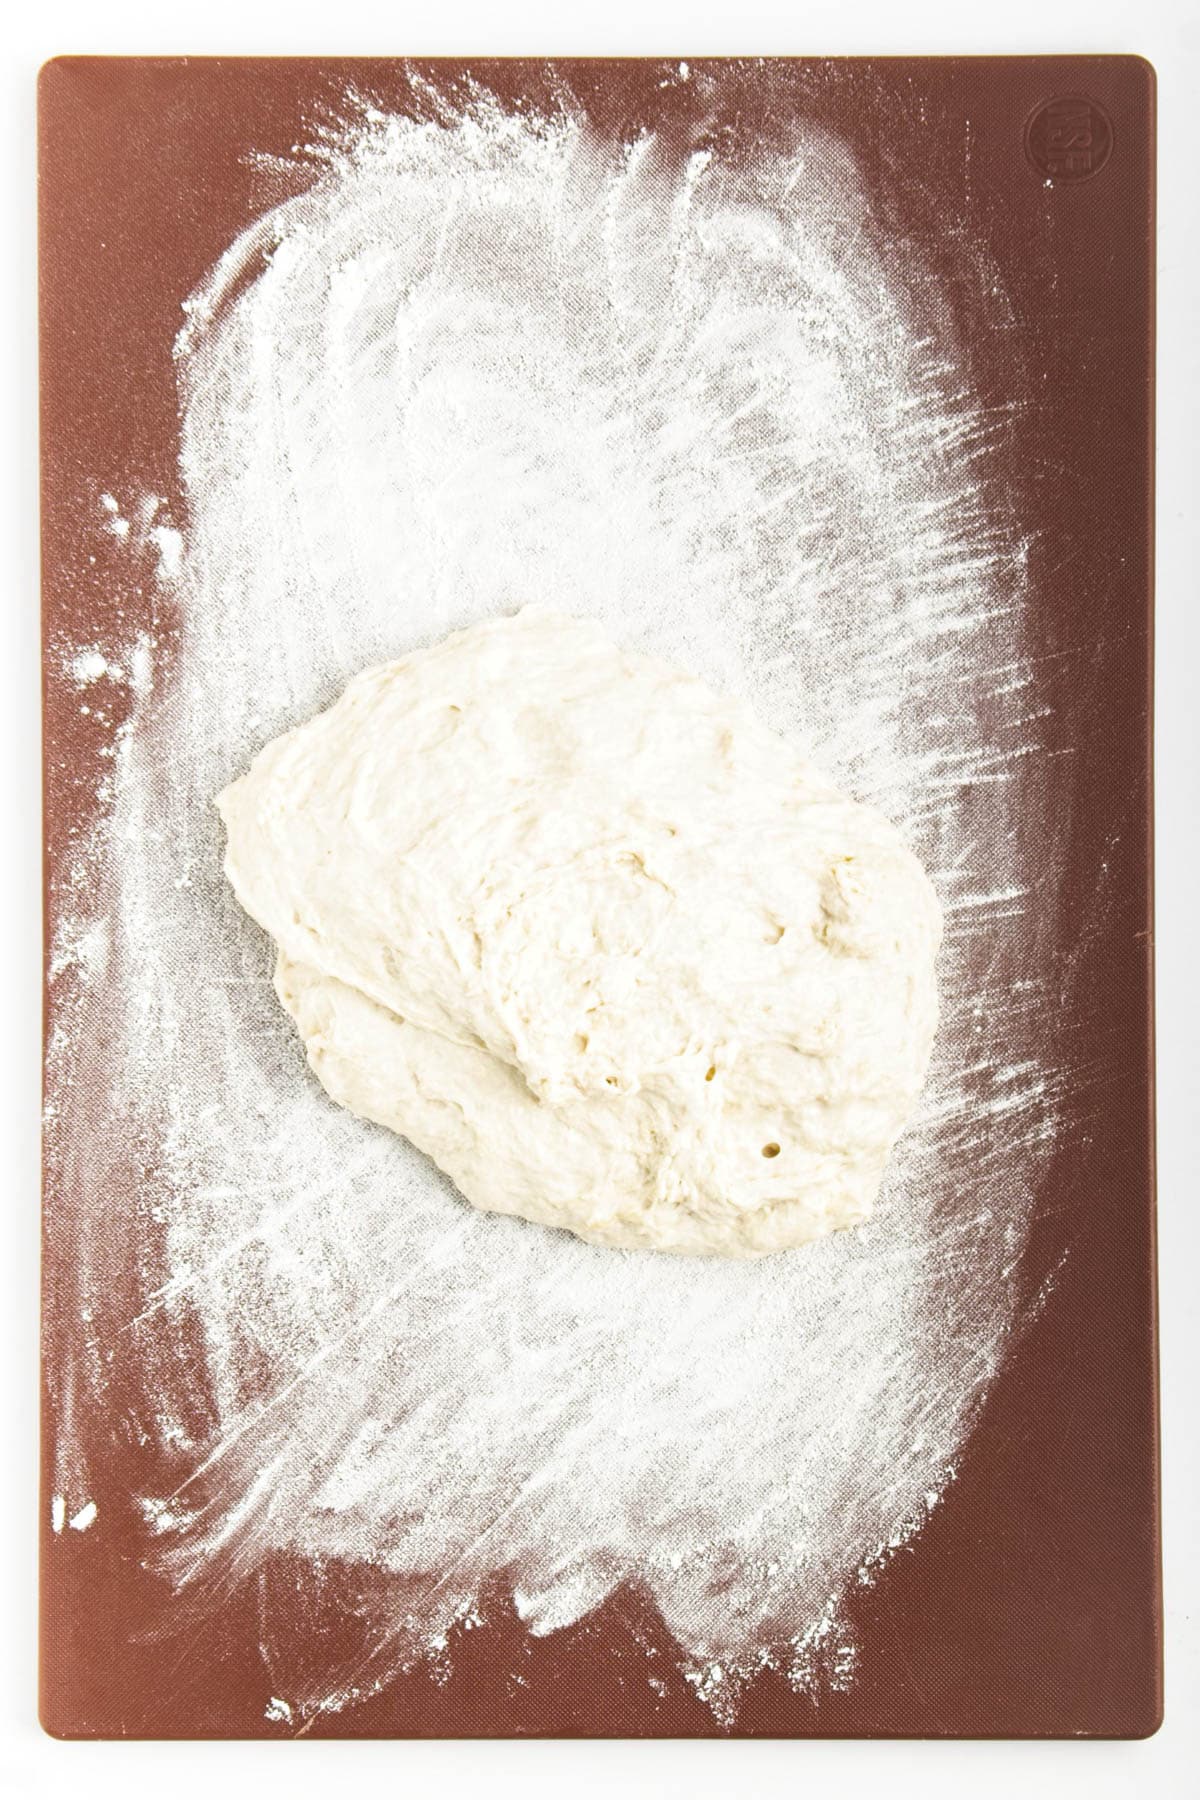 Dough on a cutting board.